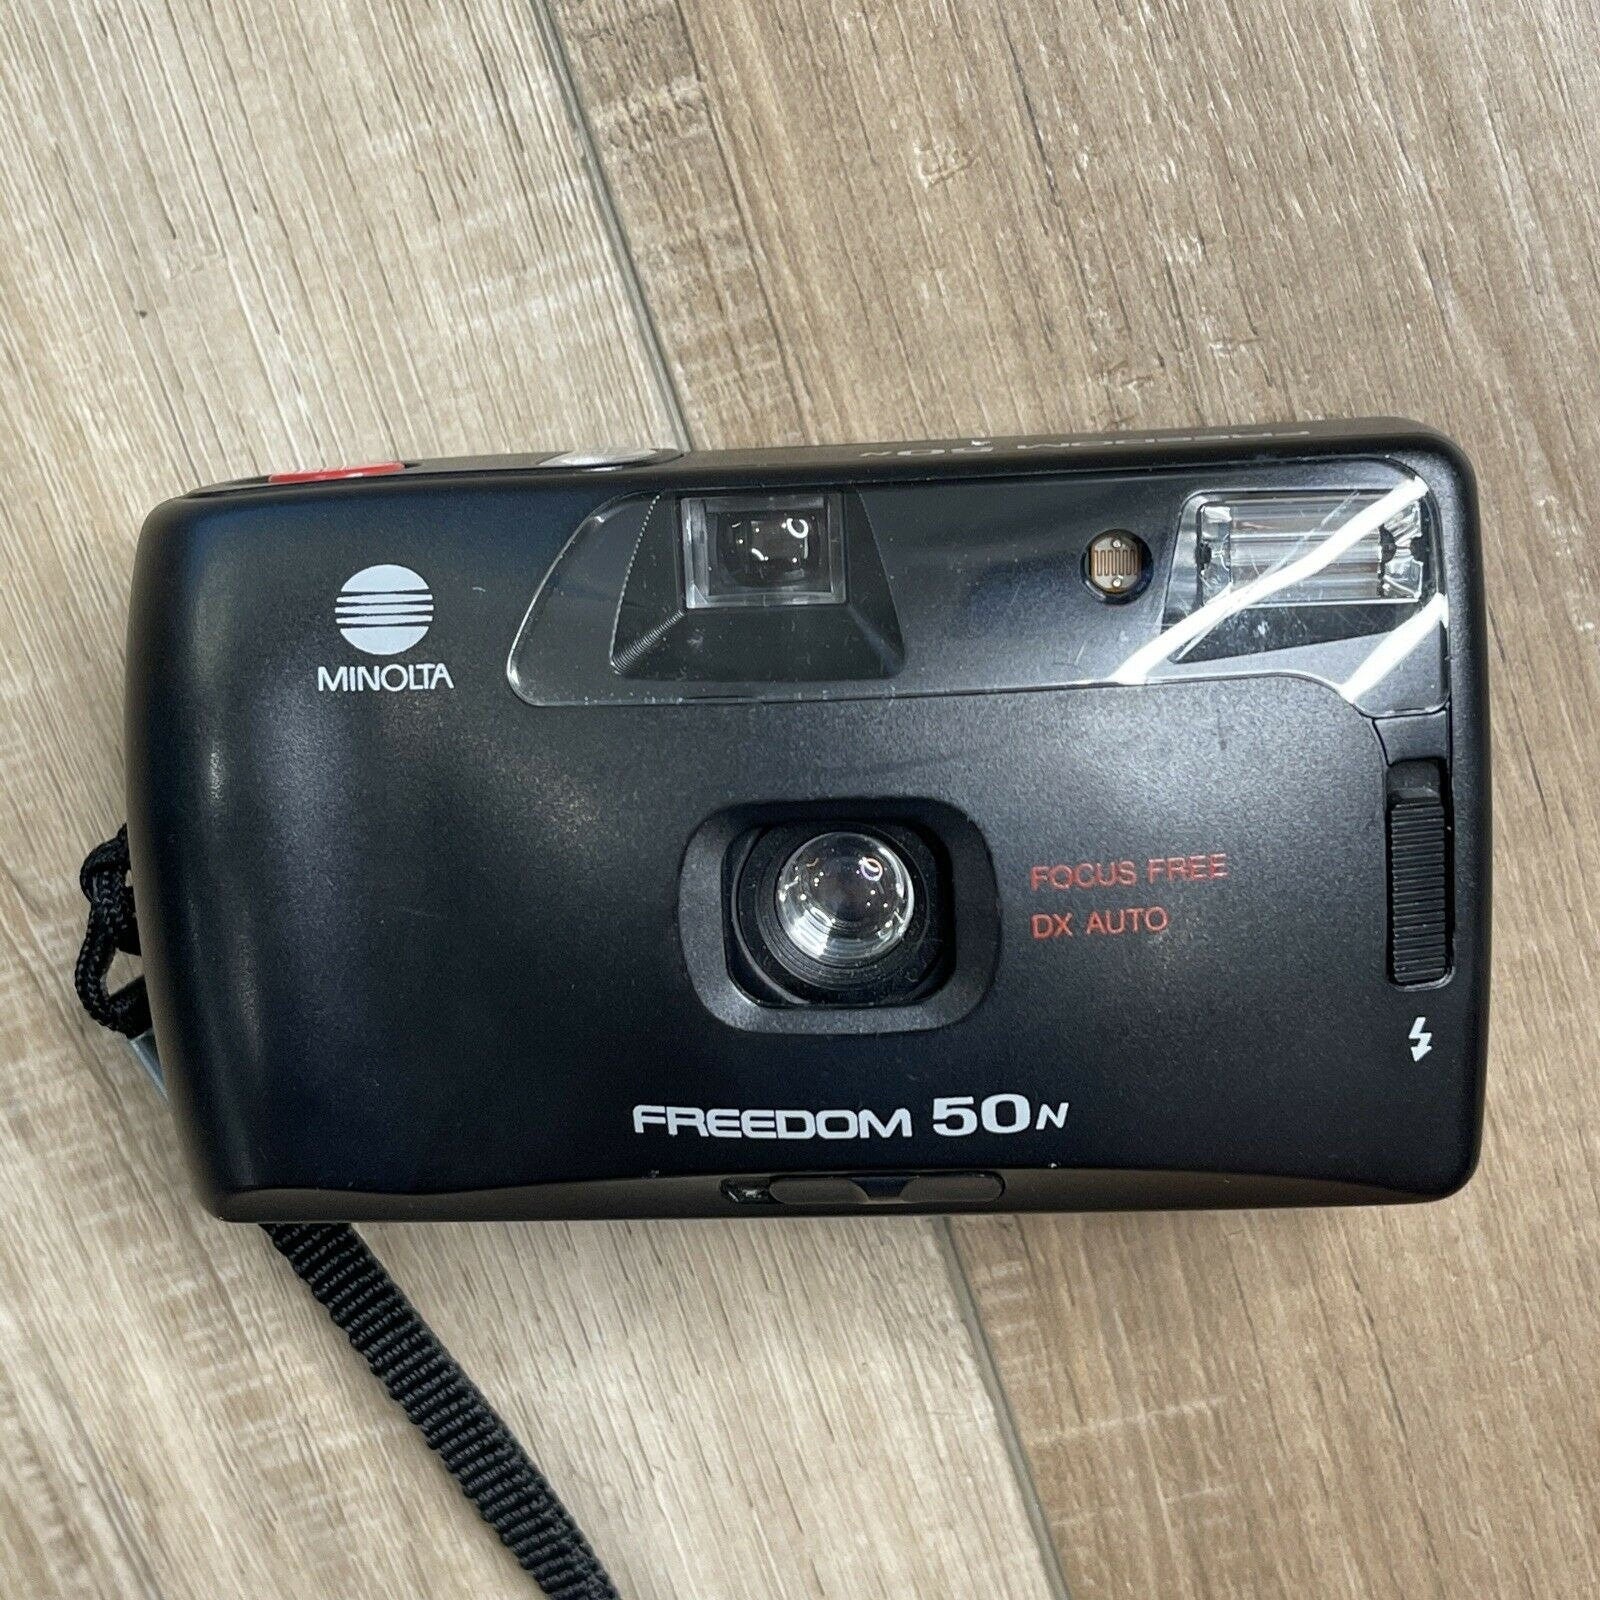 Minolta Freedom 50N Focus Free DX Auto 35mm Film Camera